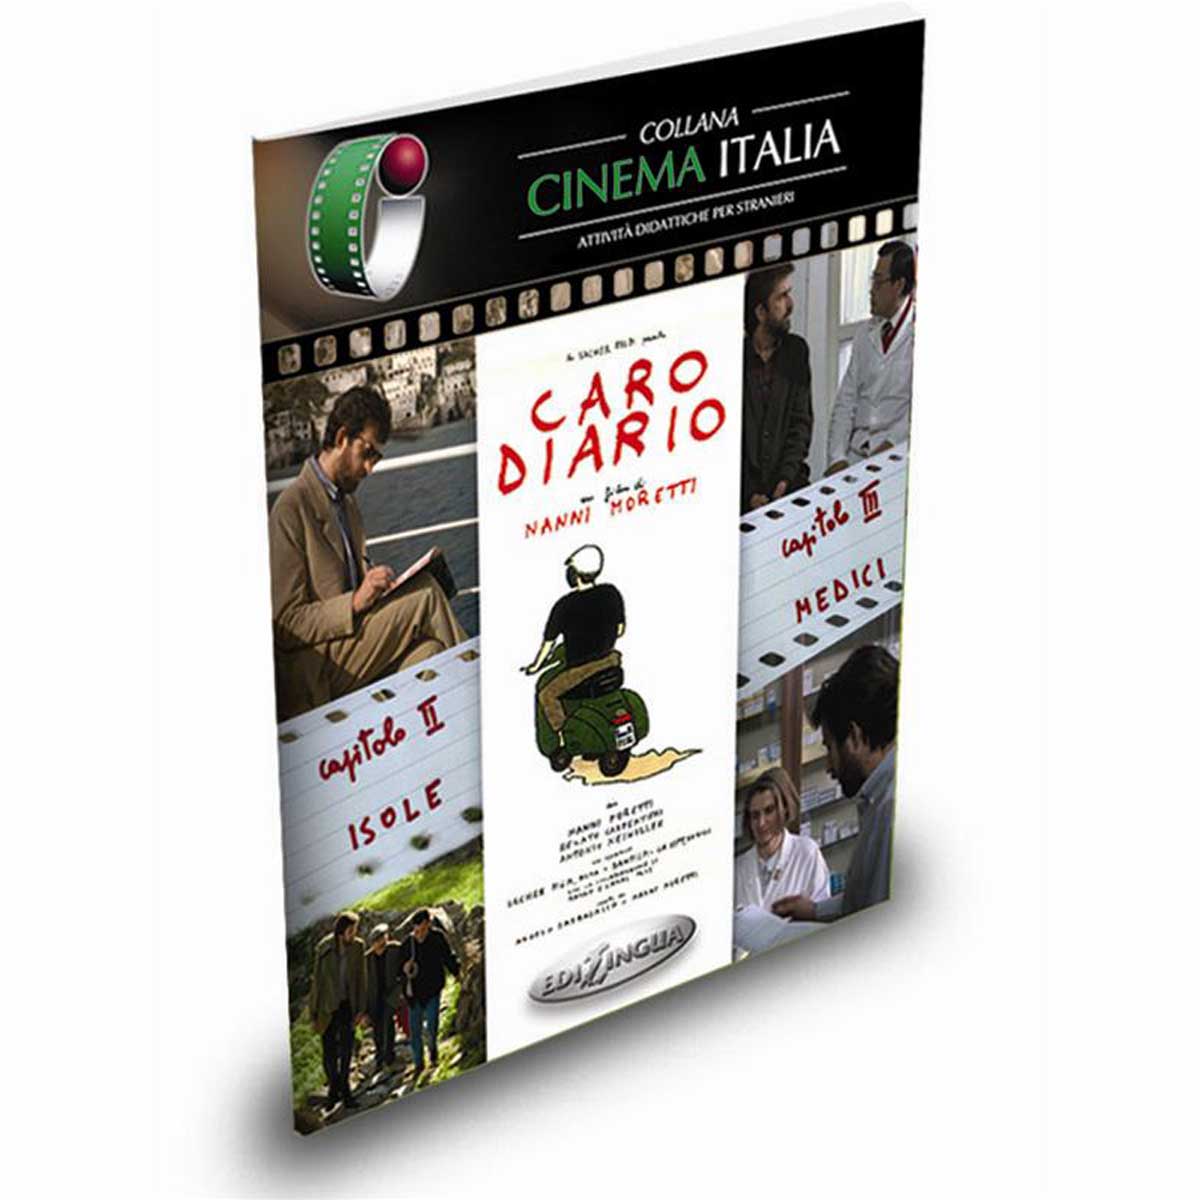 Edilingua: Cinema Italia – Caro diario: Isole / Medici